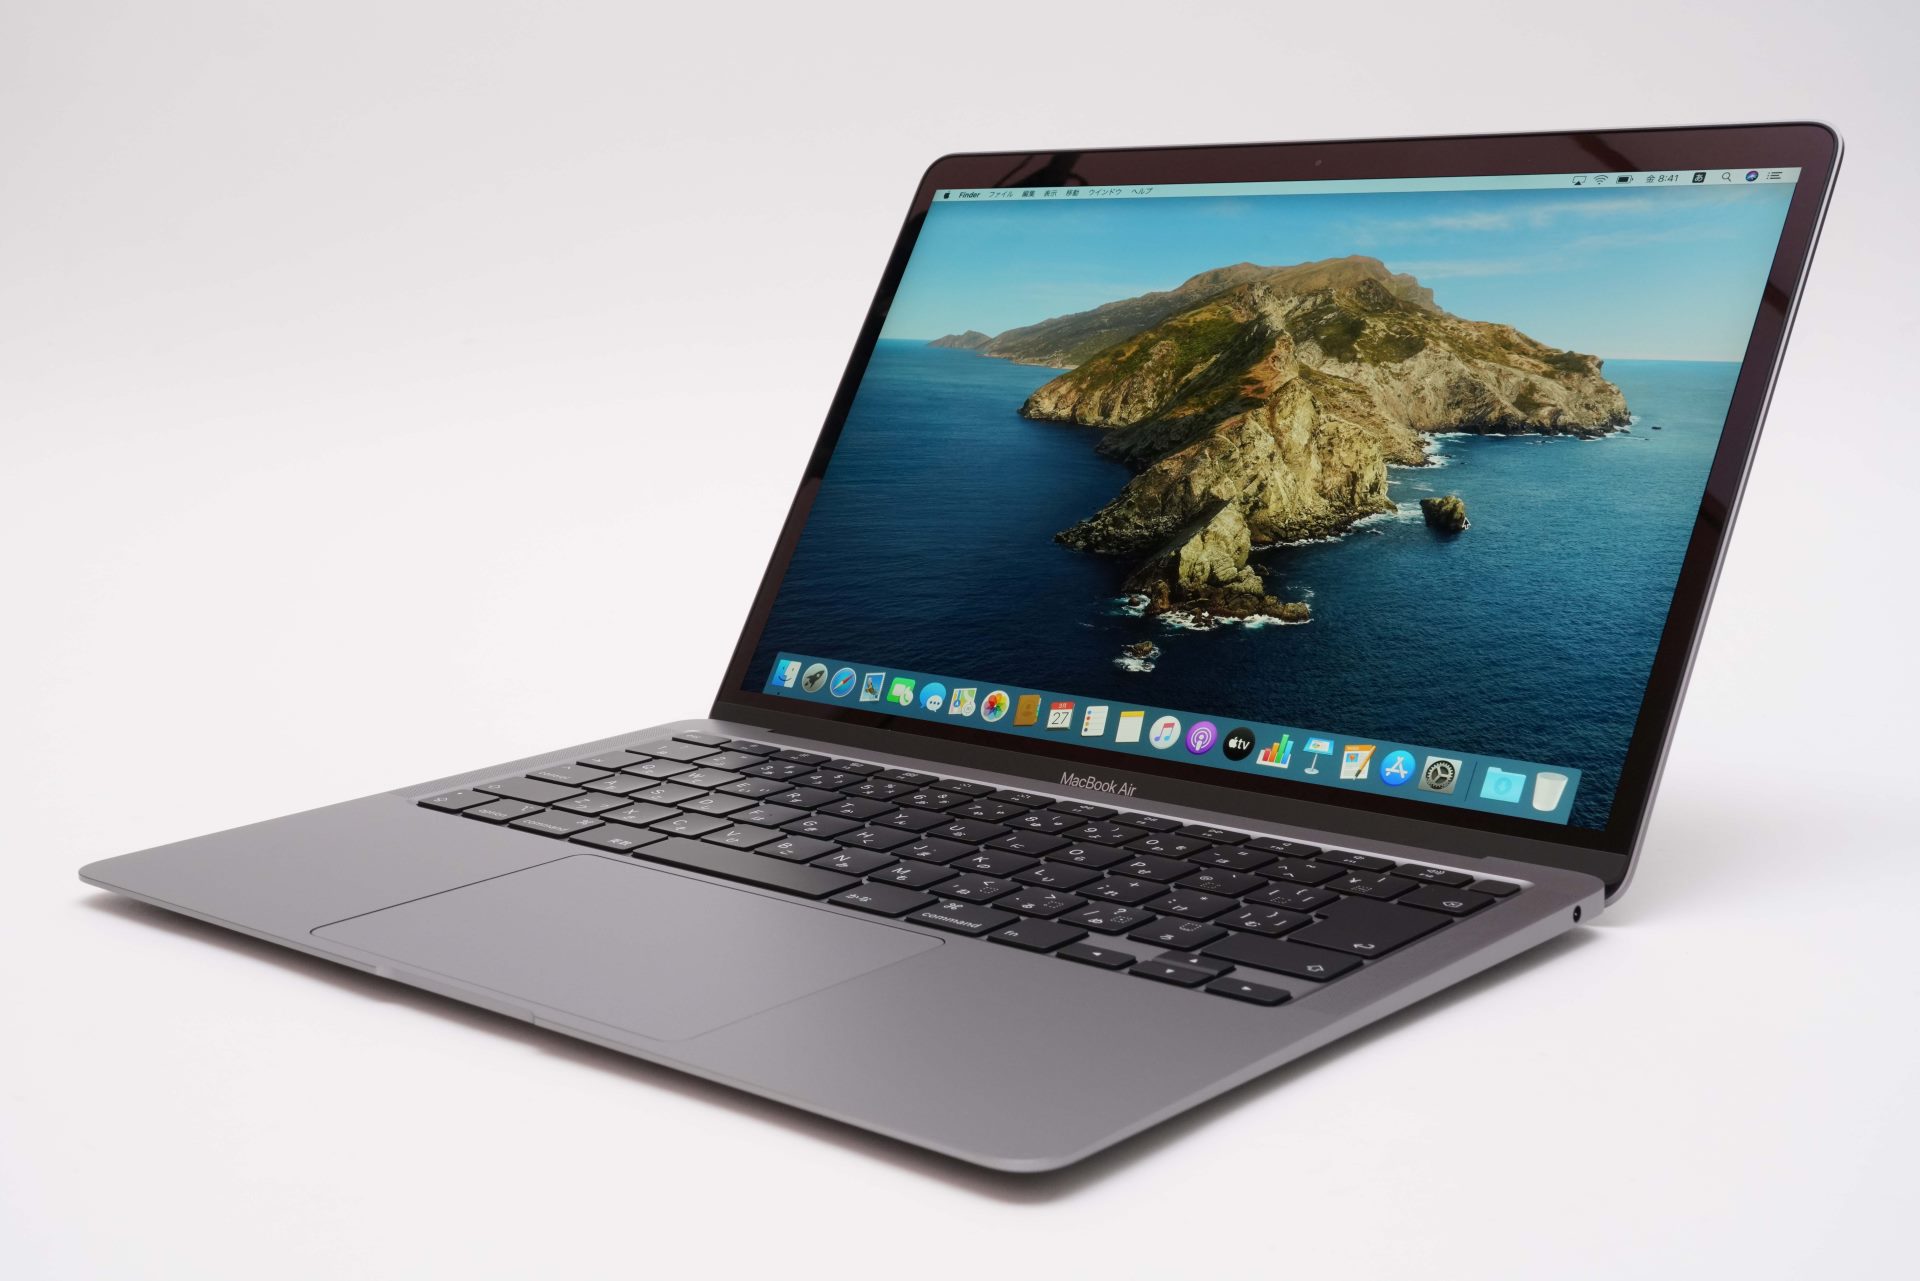 Hothotレビュー4コアに倍増した「MacBook Air 2020」をmacOSとWindowsで性能検証してみた - PC Watch